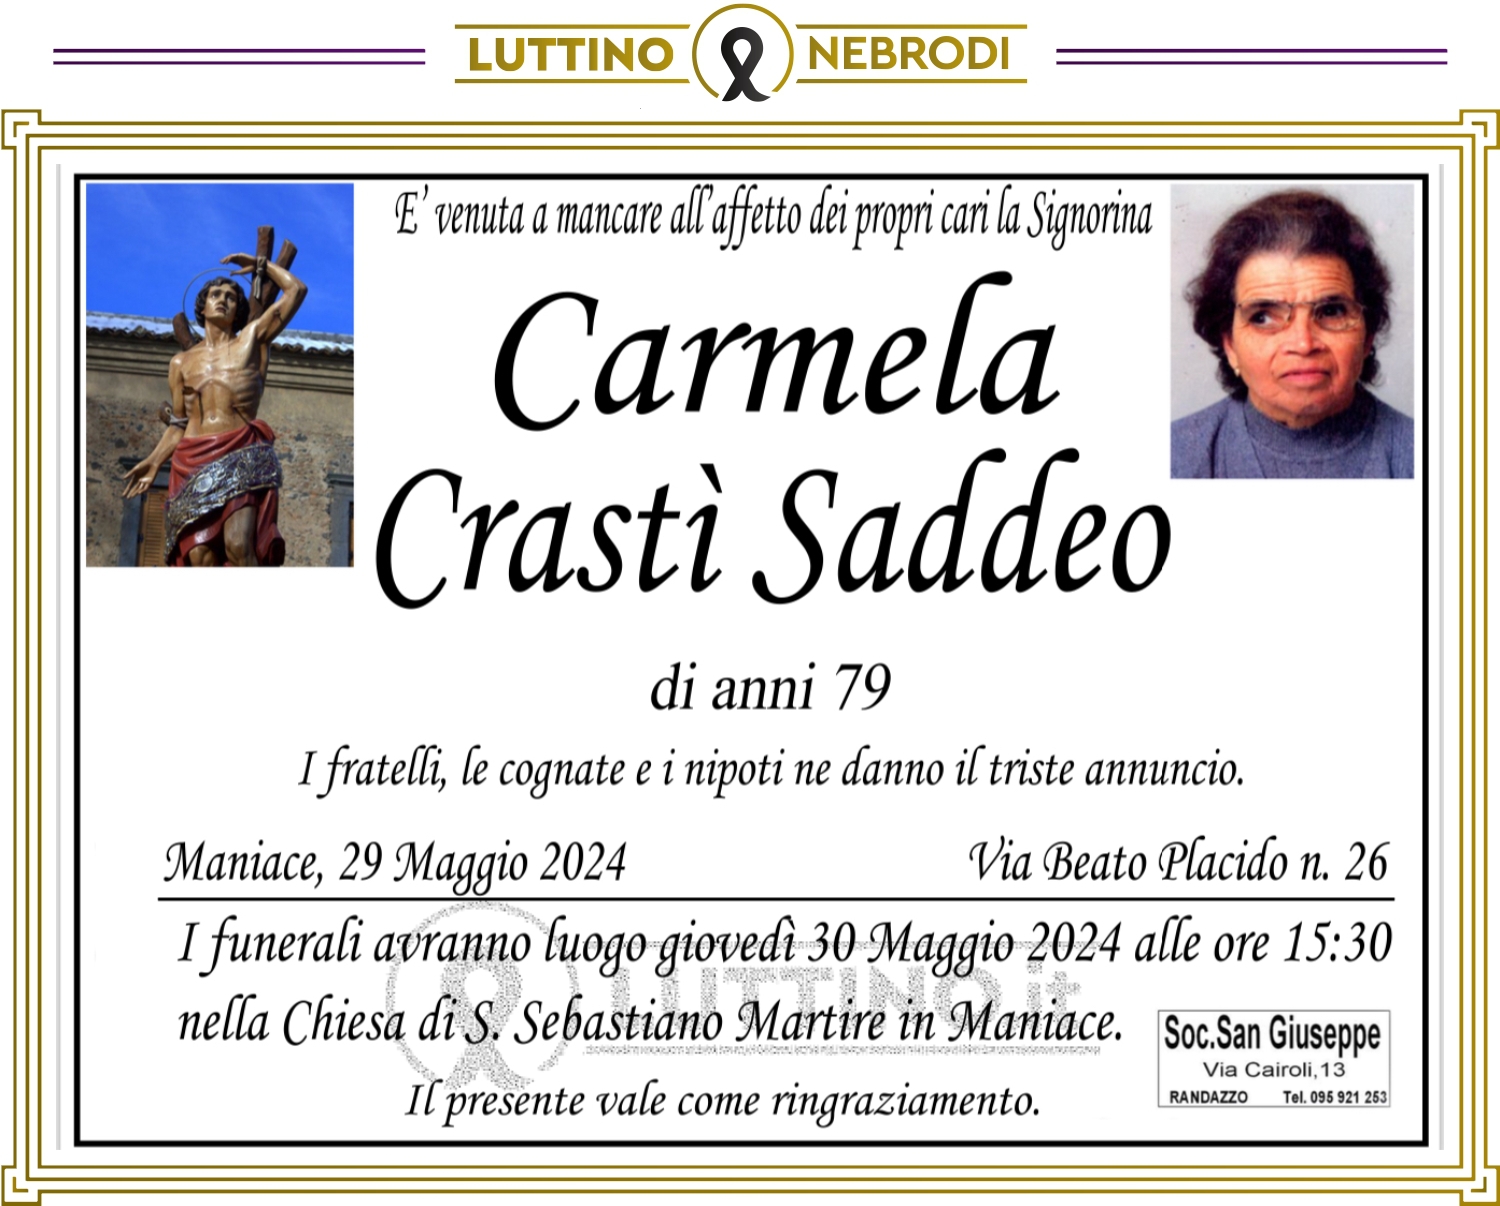 Carmela Crastì Saddeo